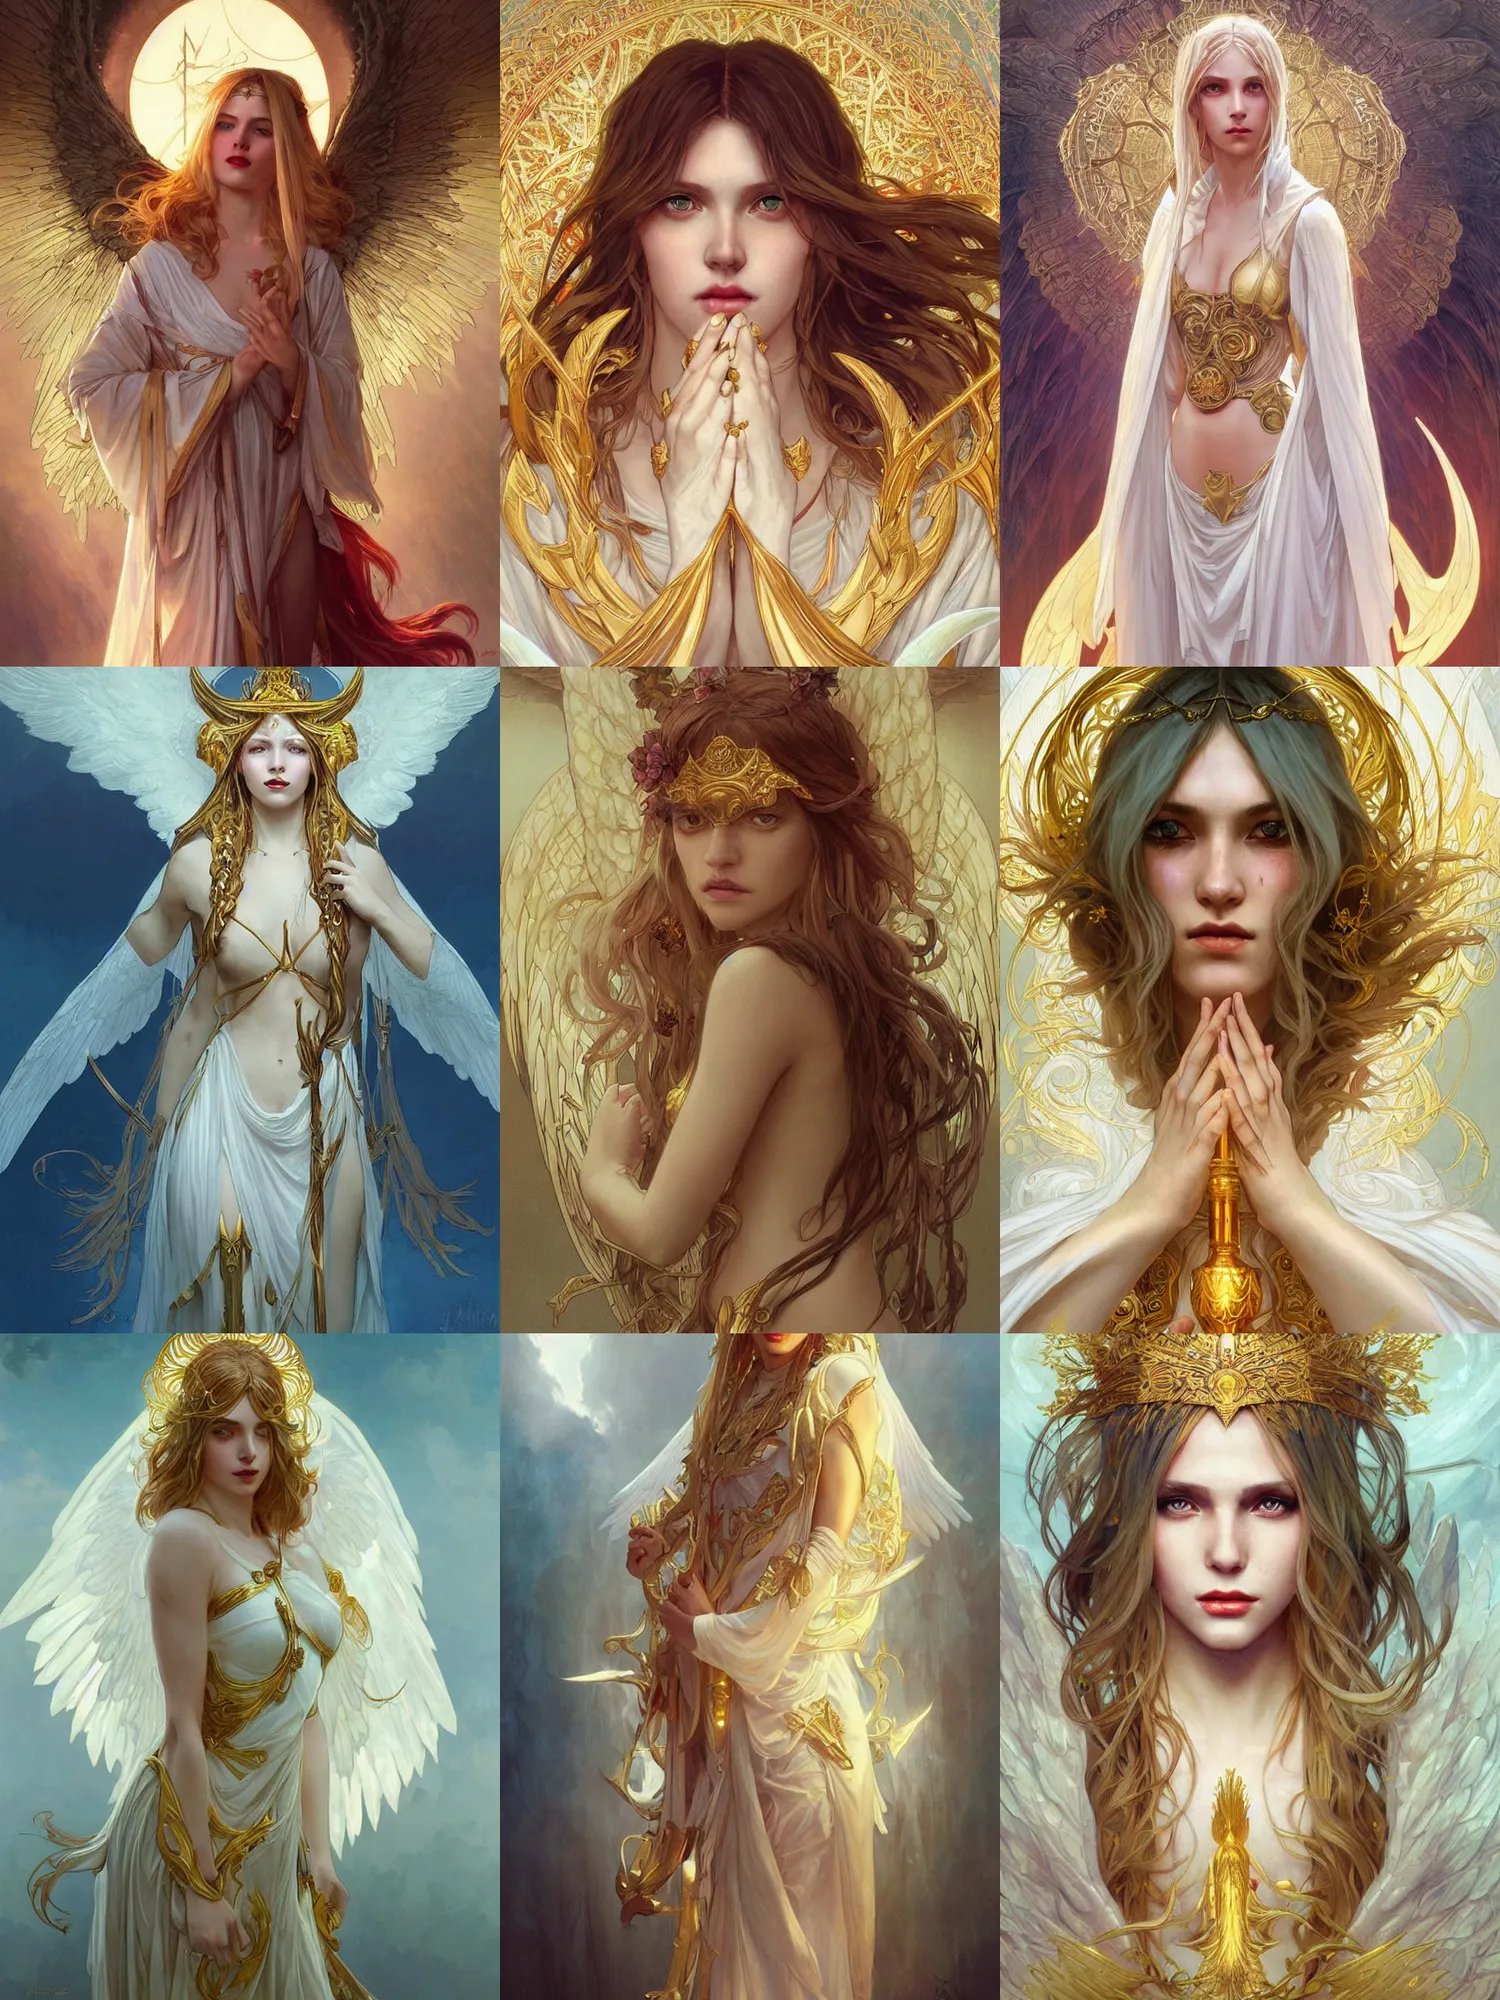 Prompt: priestess with angelical wings, golden hair, fluorescent eyes, white skin, lipstick, beautiful, goodness, high fantasy, illustration, by artgerm, greg rutkowski, alphonse mucha